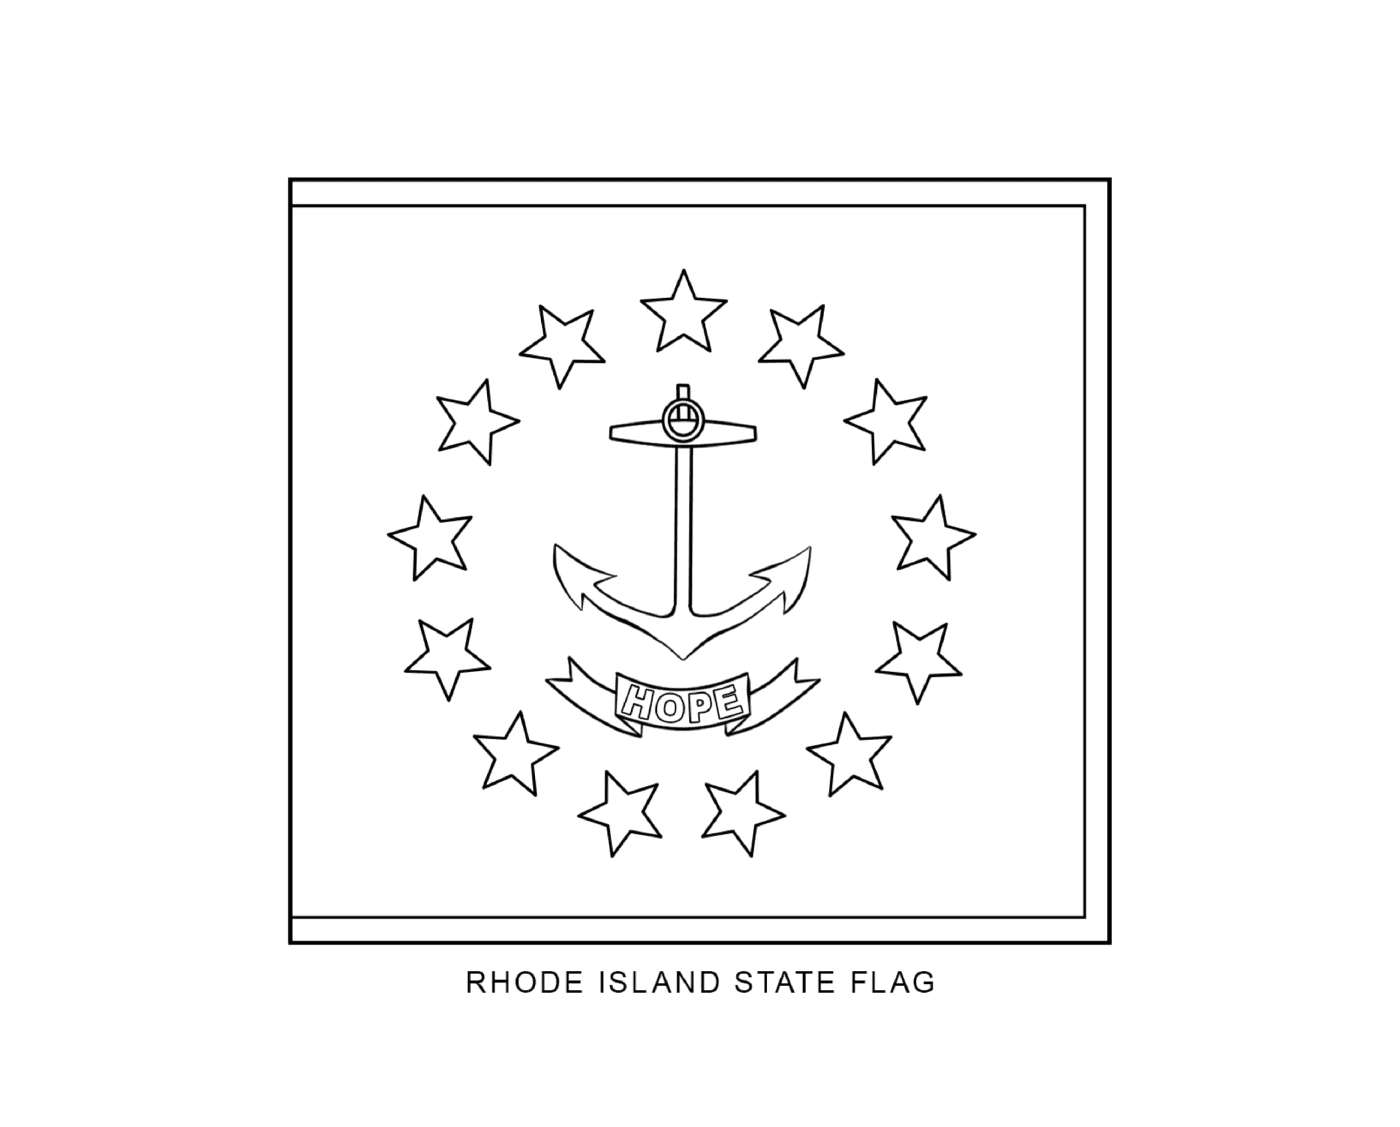  Flag of Rhode Island State 